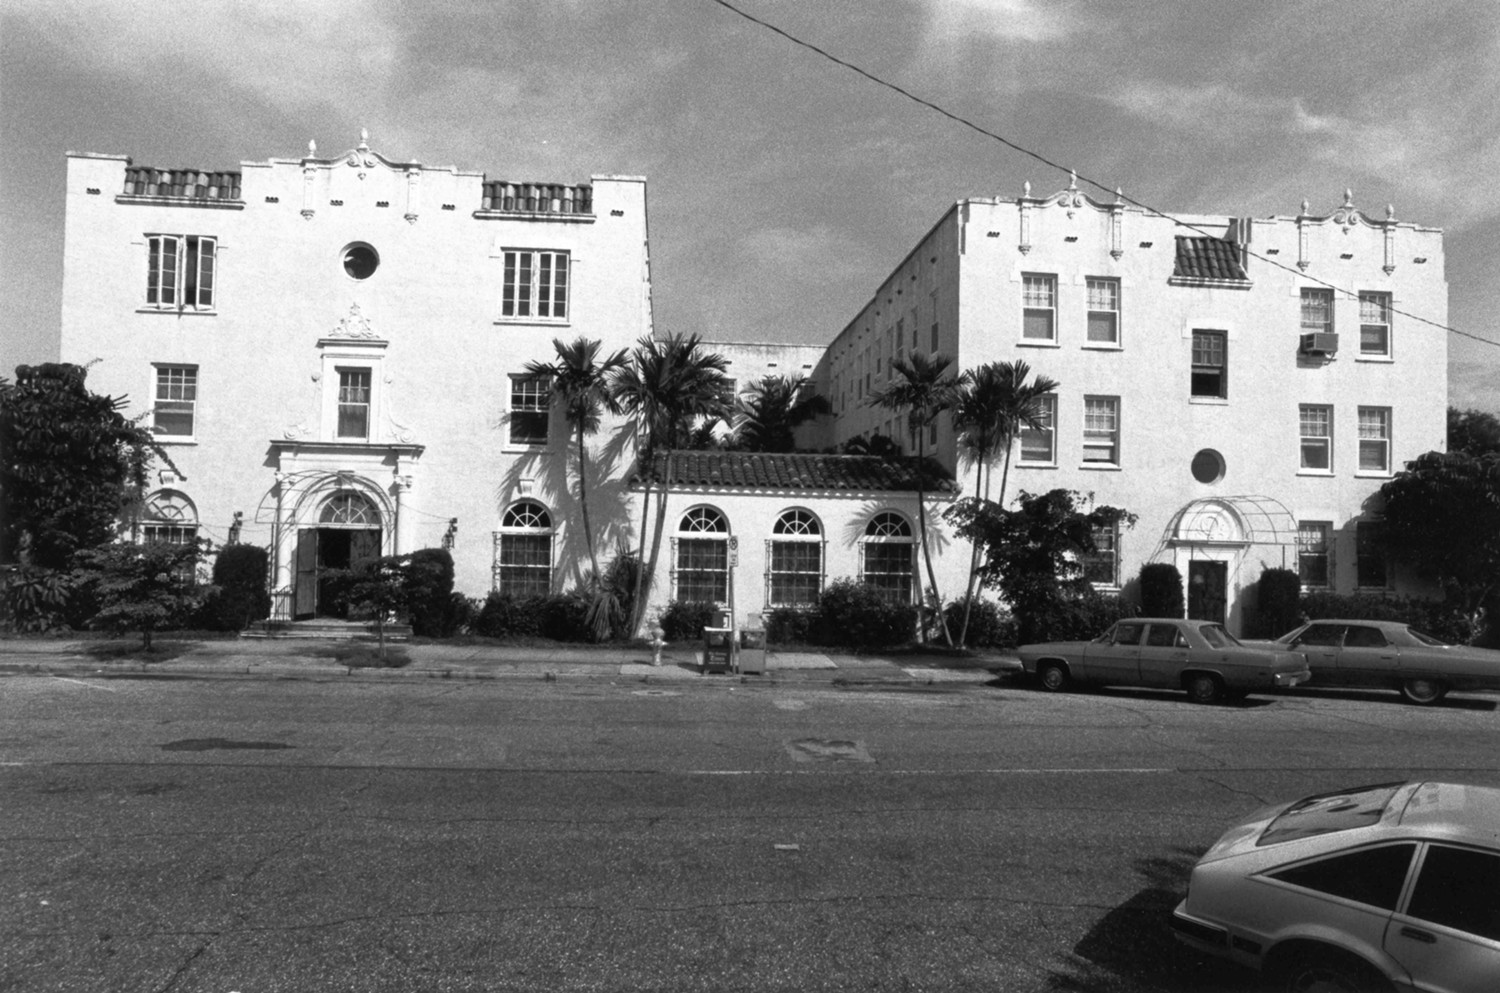 Hibiscus Garden Apartments, West Palm Beach Florida 